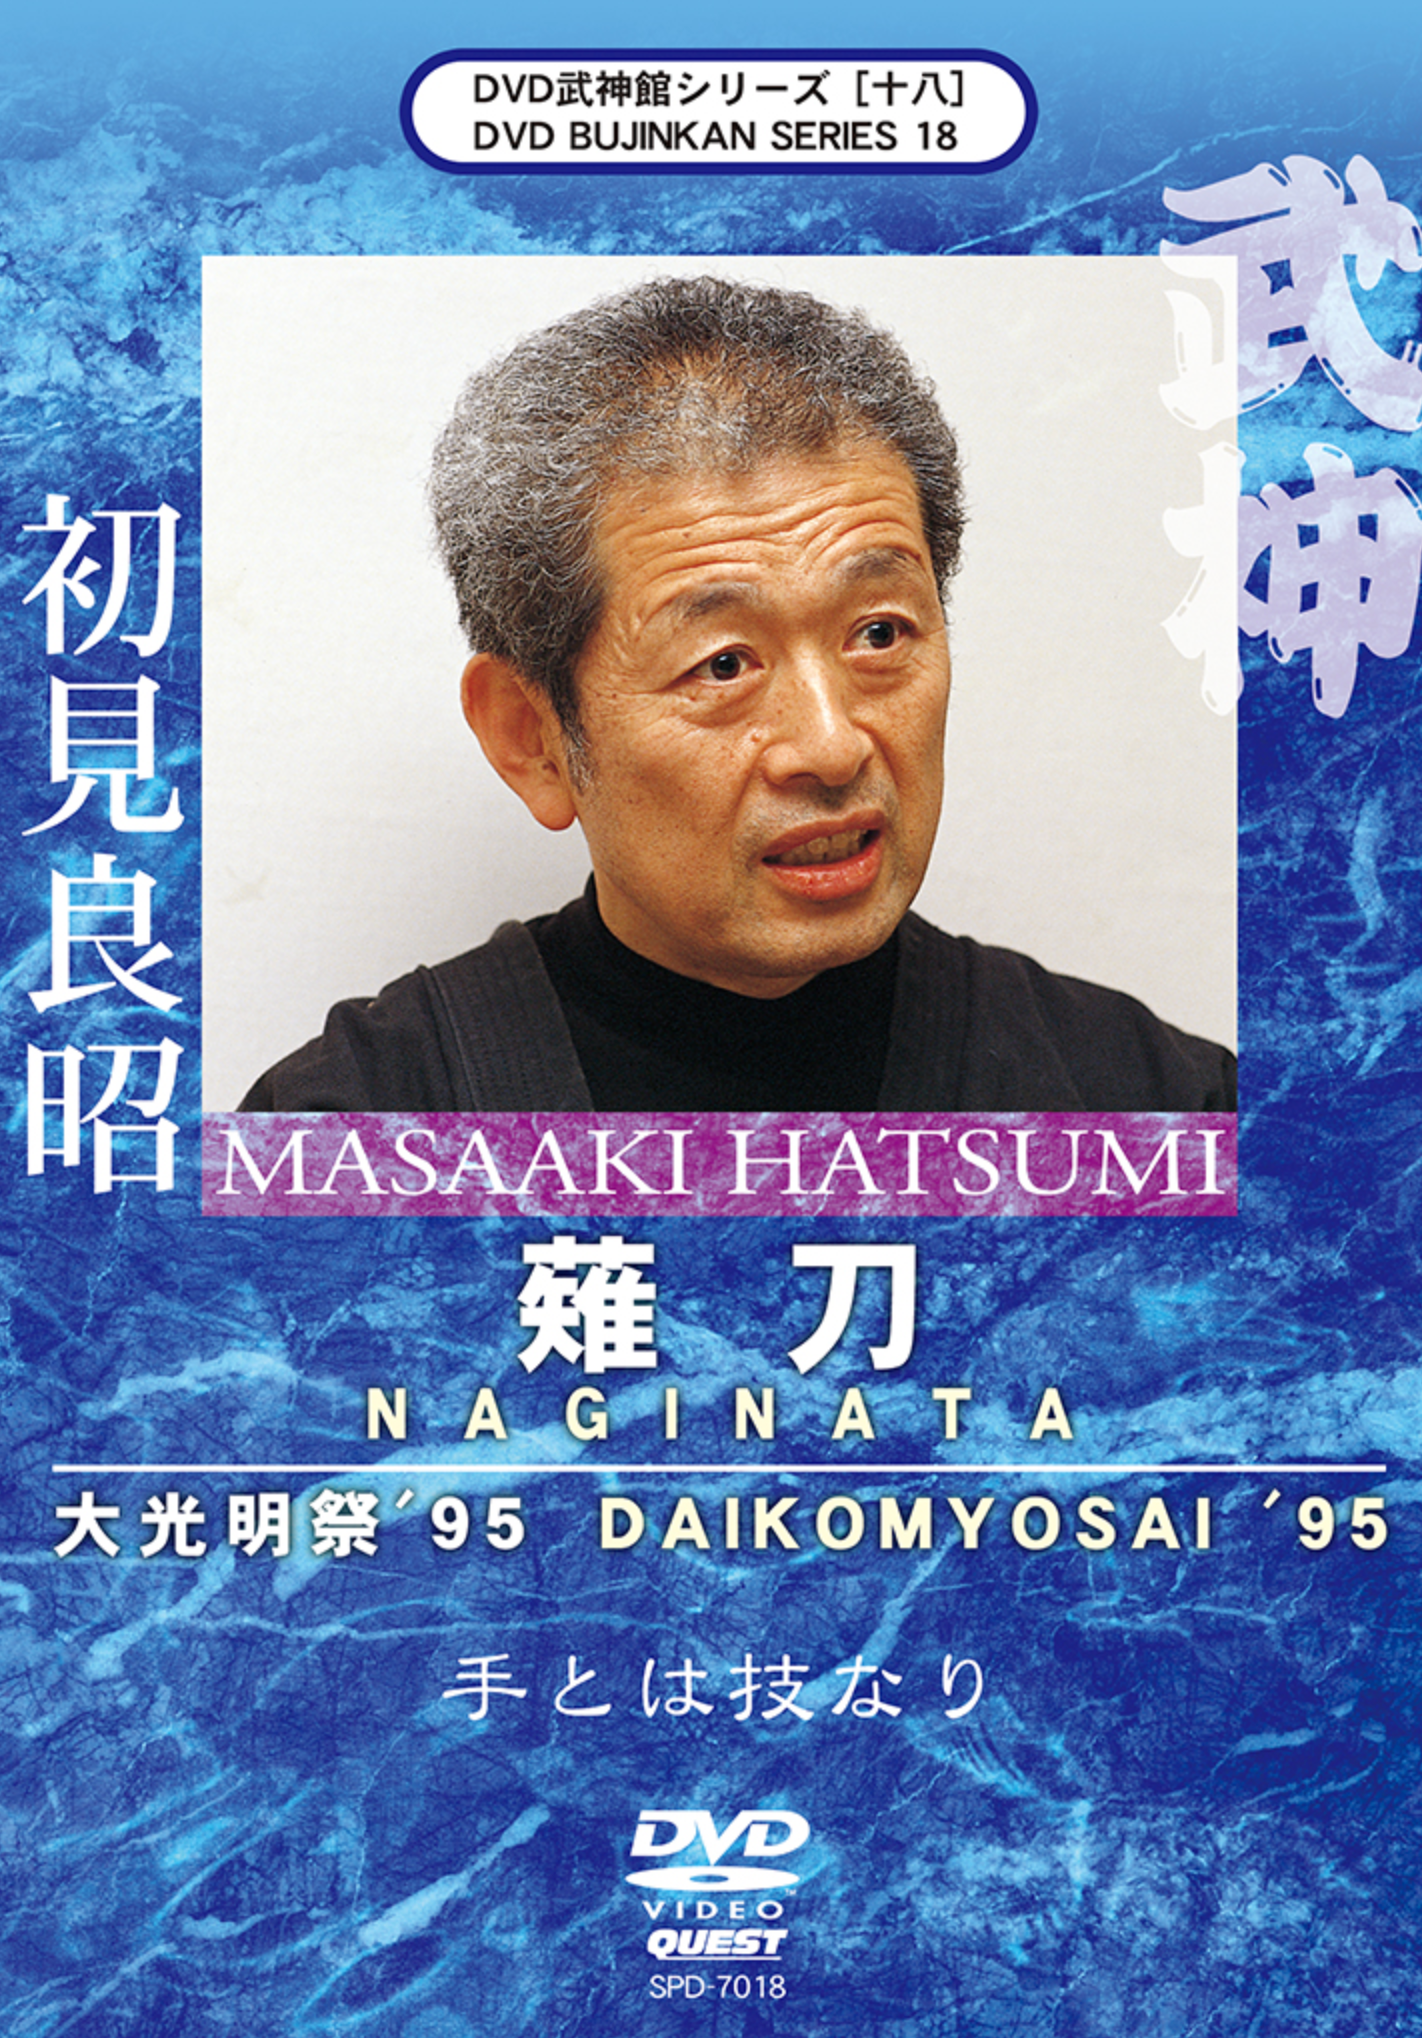 Bujinkan DVD Series 18: Naginata with Masaaki Hatsumi - Budovideos Inc